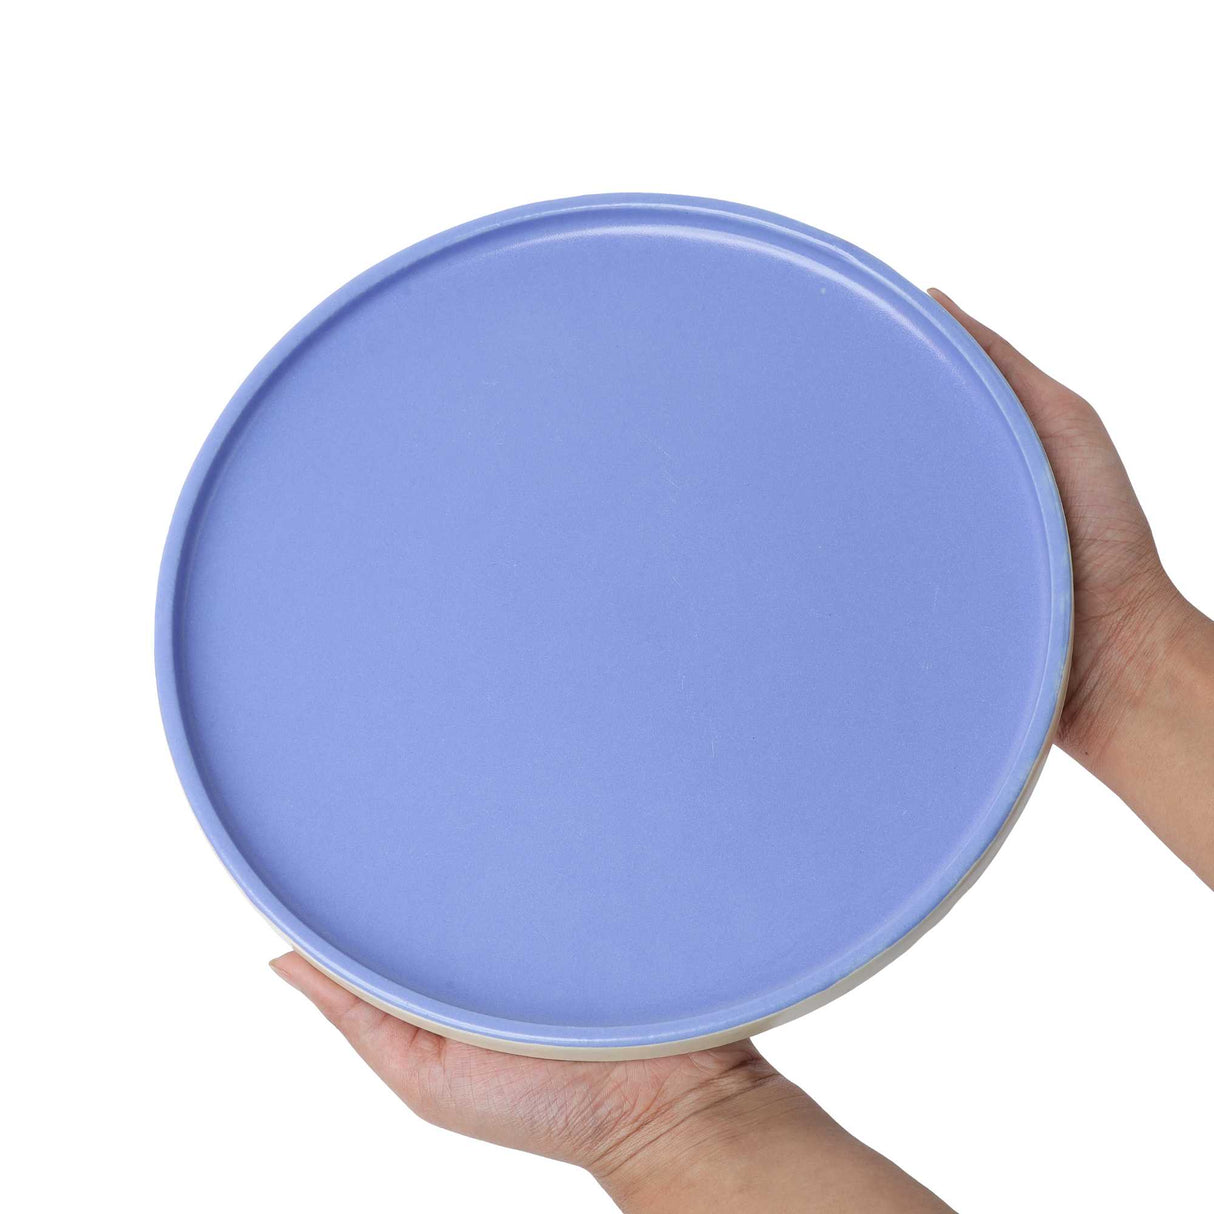 Pastel blue ceramic plate